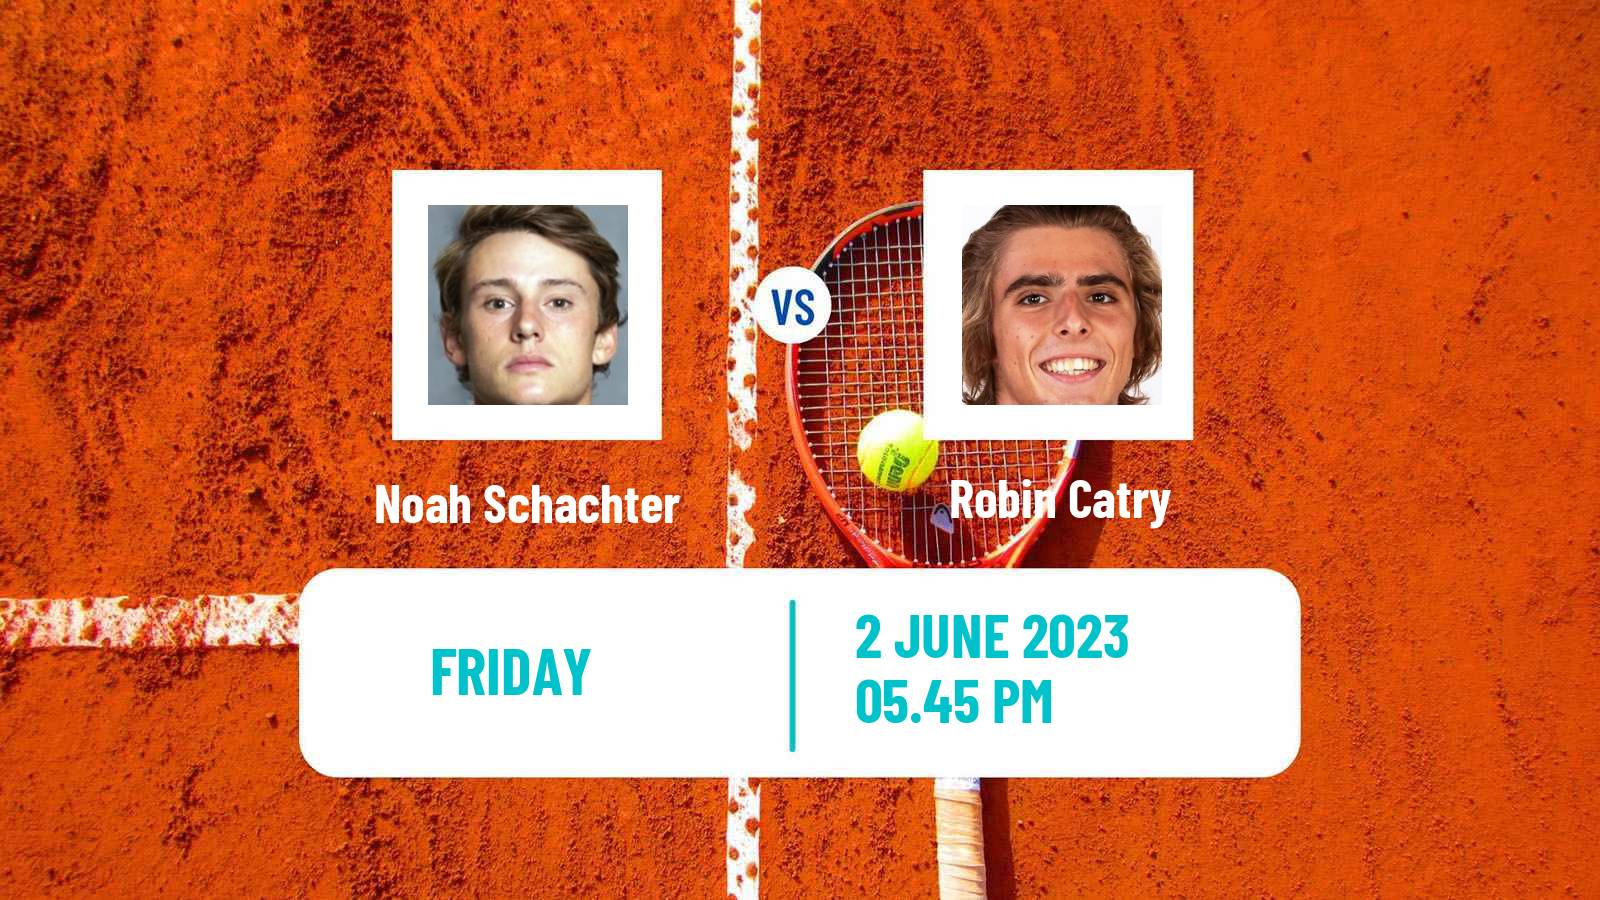 Tennis ITF M15 Rancho Santa Fe Ca Men Noah Schachter - Robin Catry